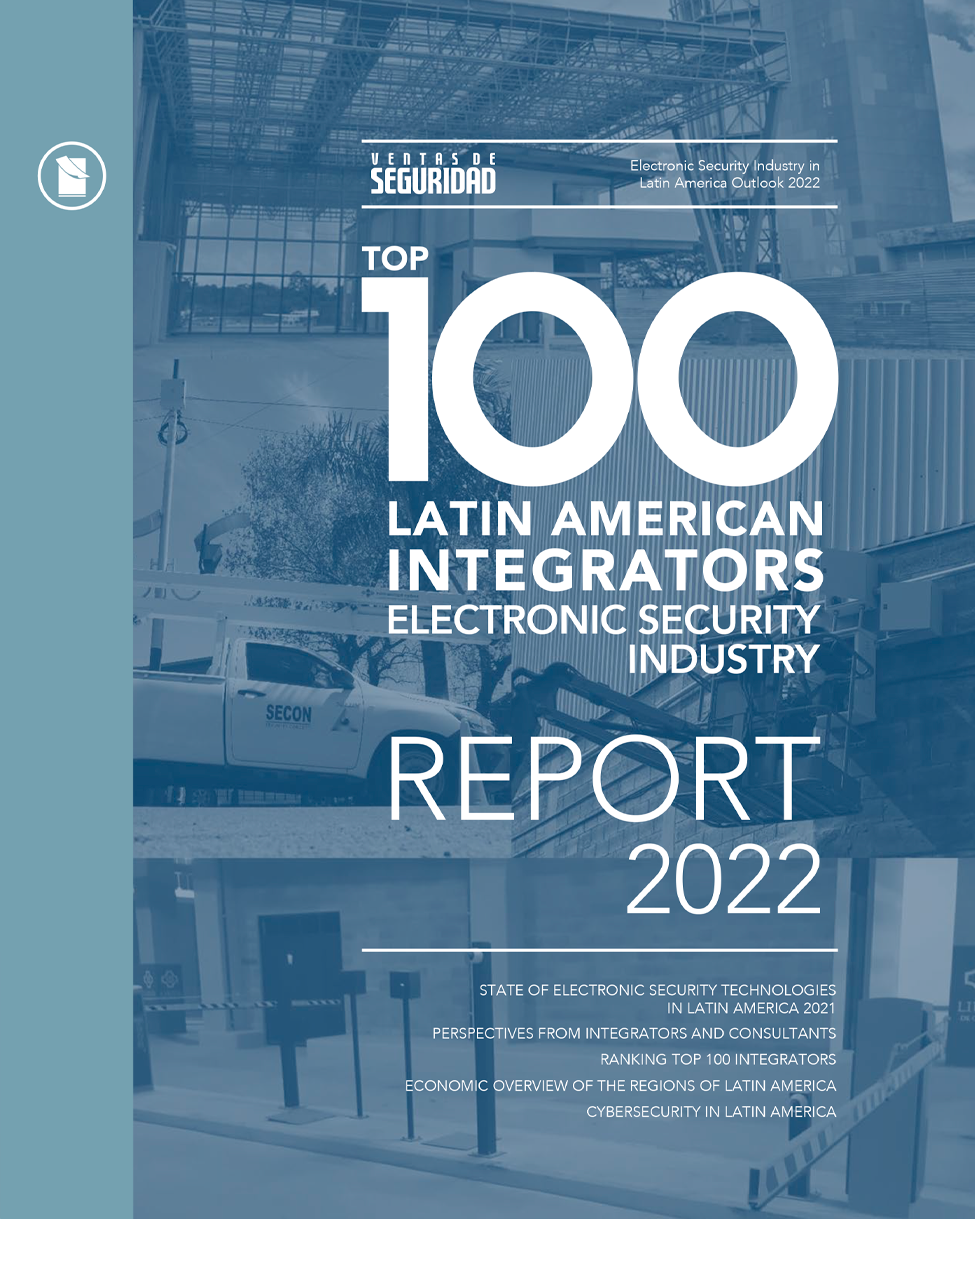 TOP 100 LATIN AMERICAN ELECTRONIC SECURITY INTEGRATORS • 2022